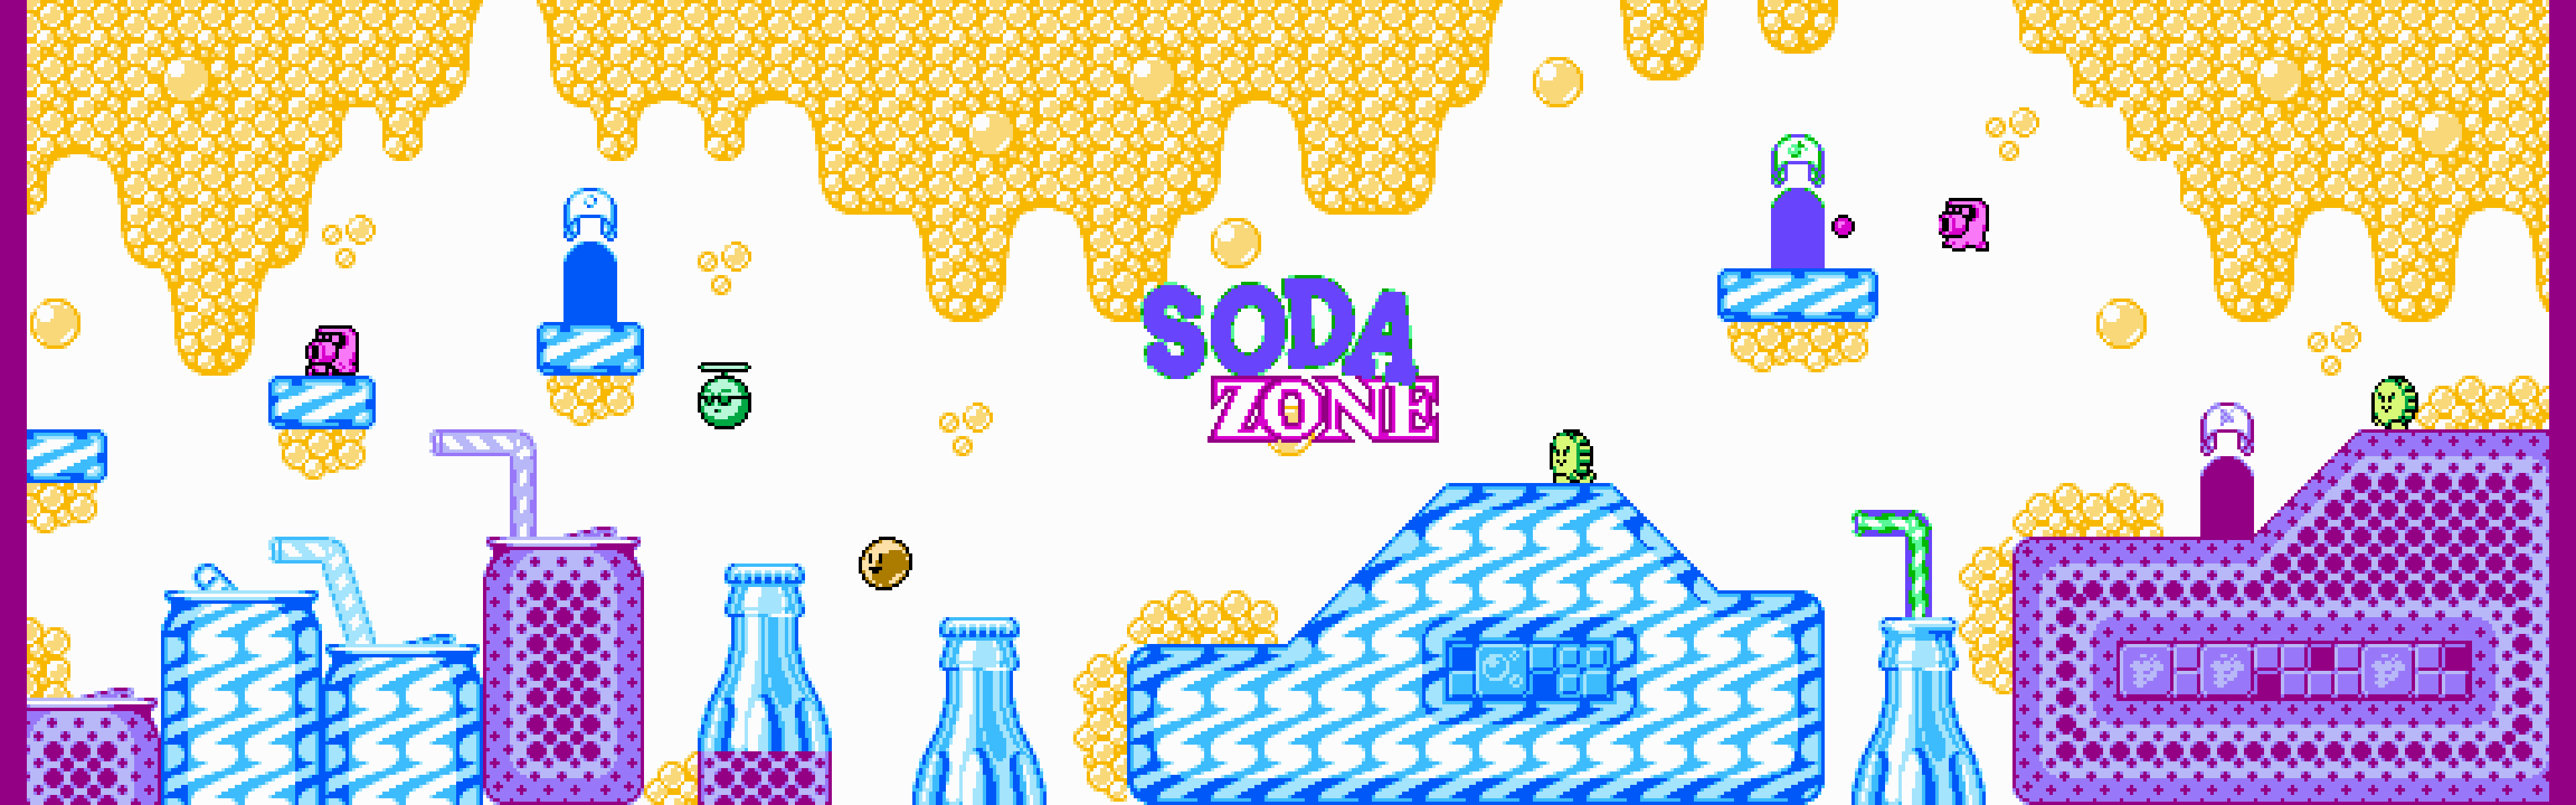 Soda Zone Asset Pack